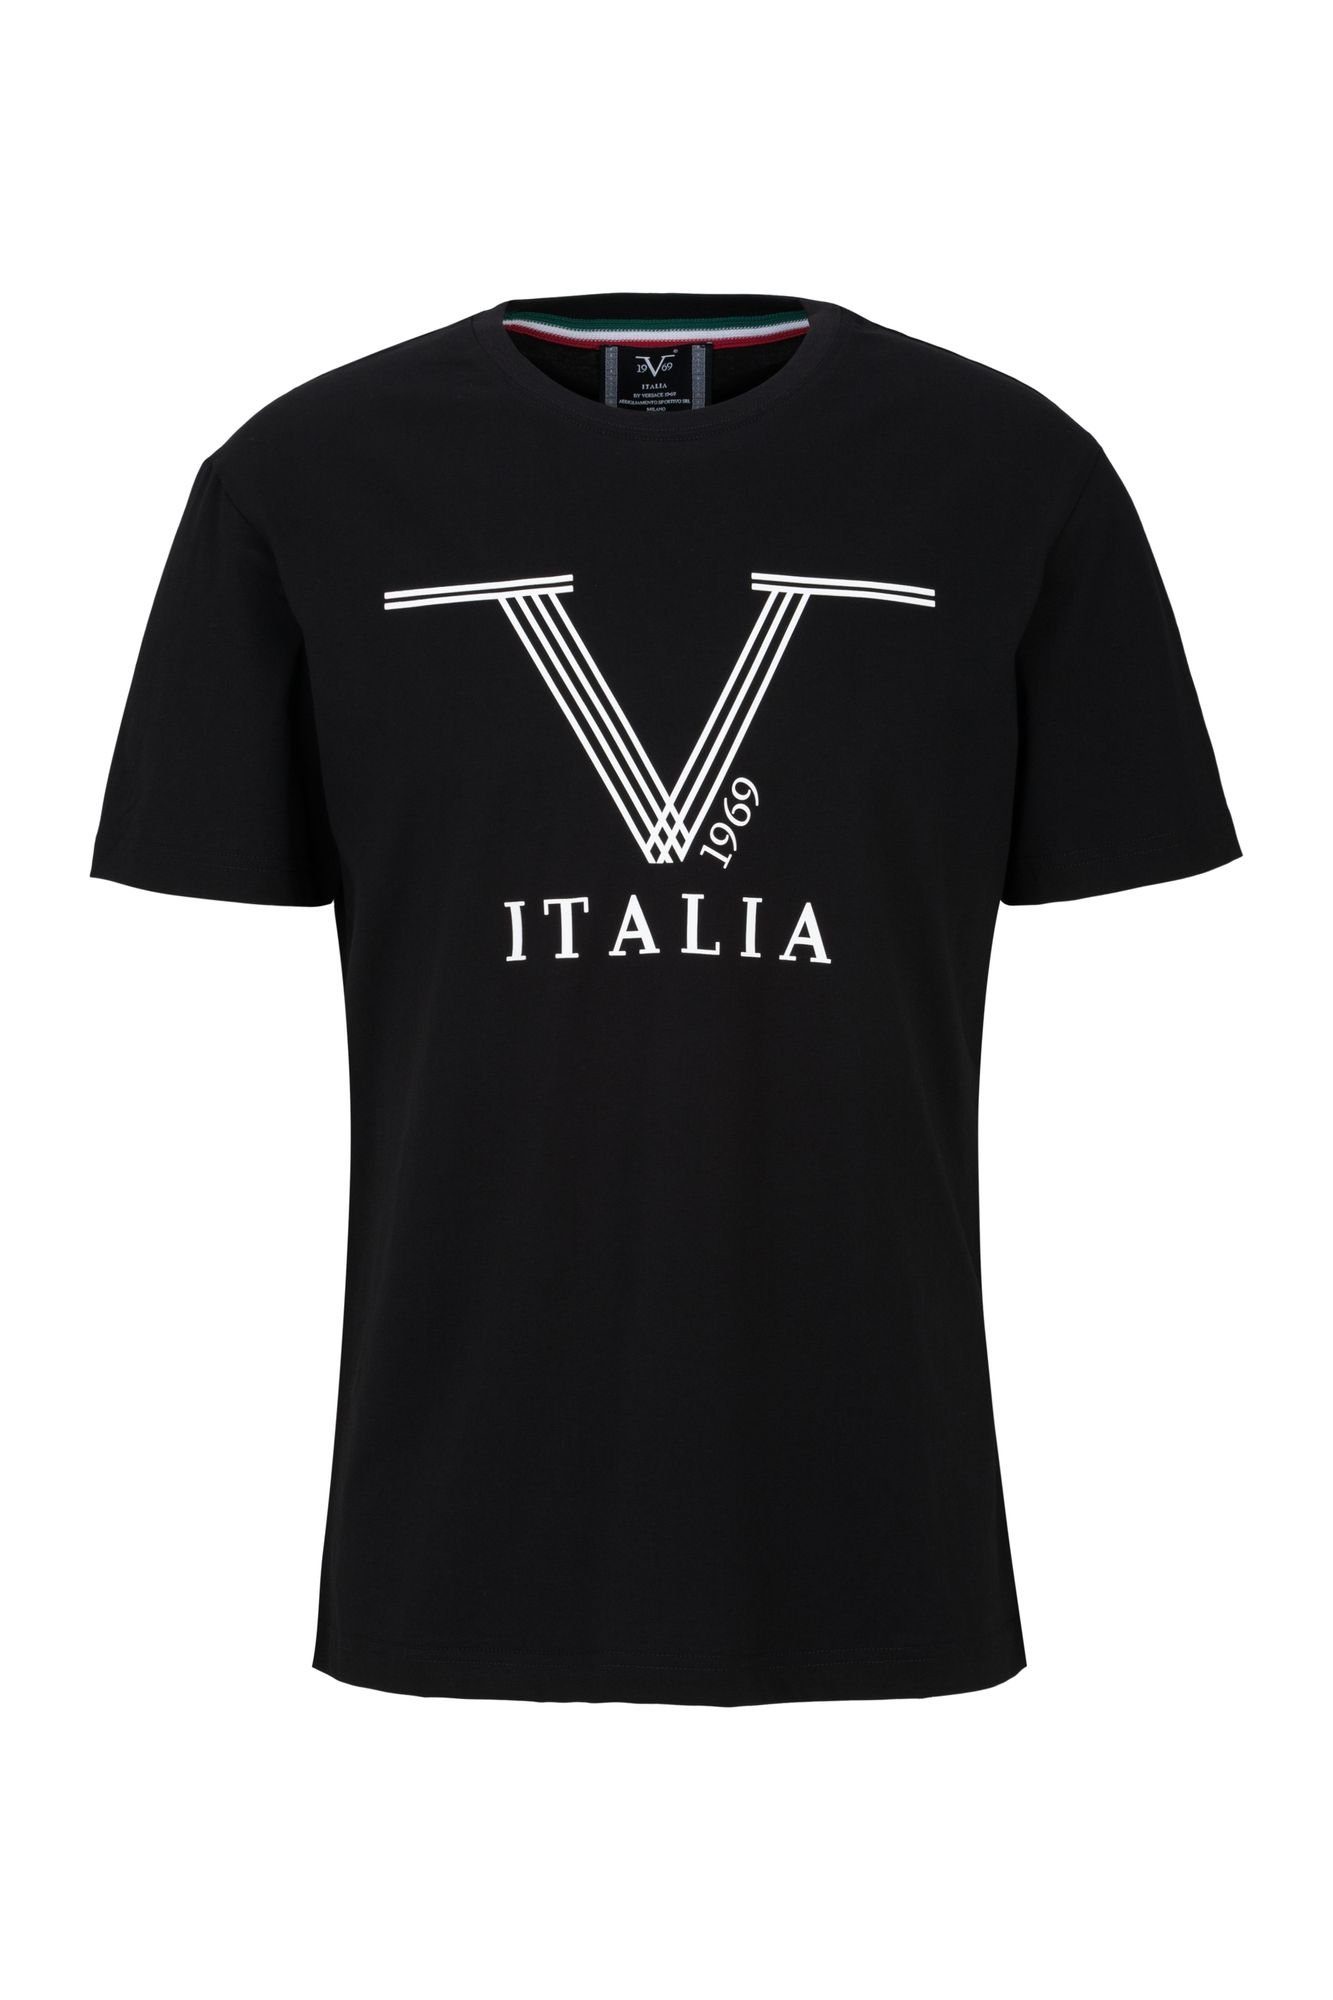 19V69 Italia by Versace T-Shirt by Versace Sportivo SRL - Pierre BLACK | T-Shirts